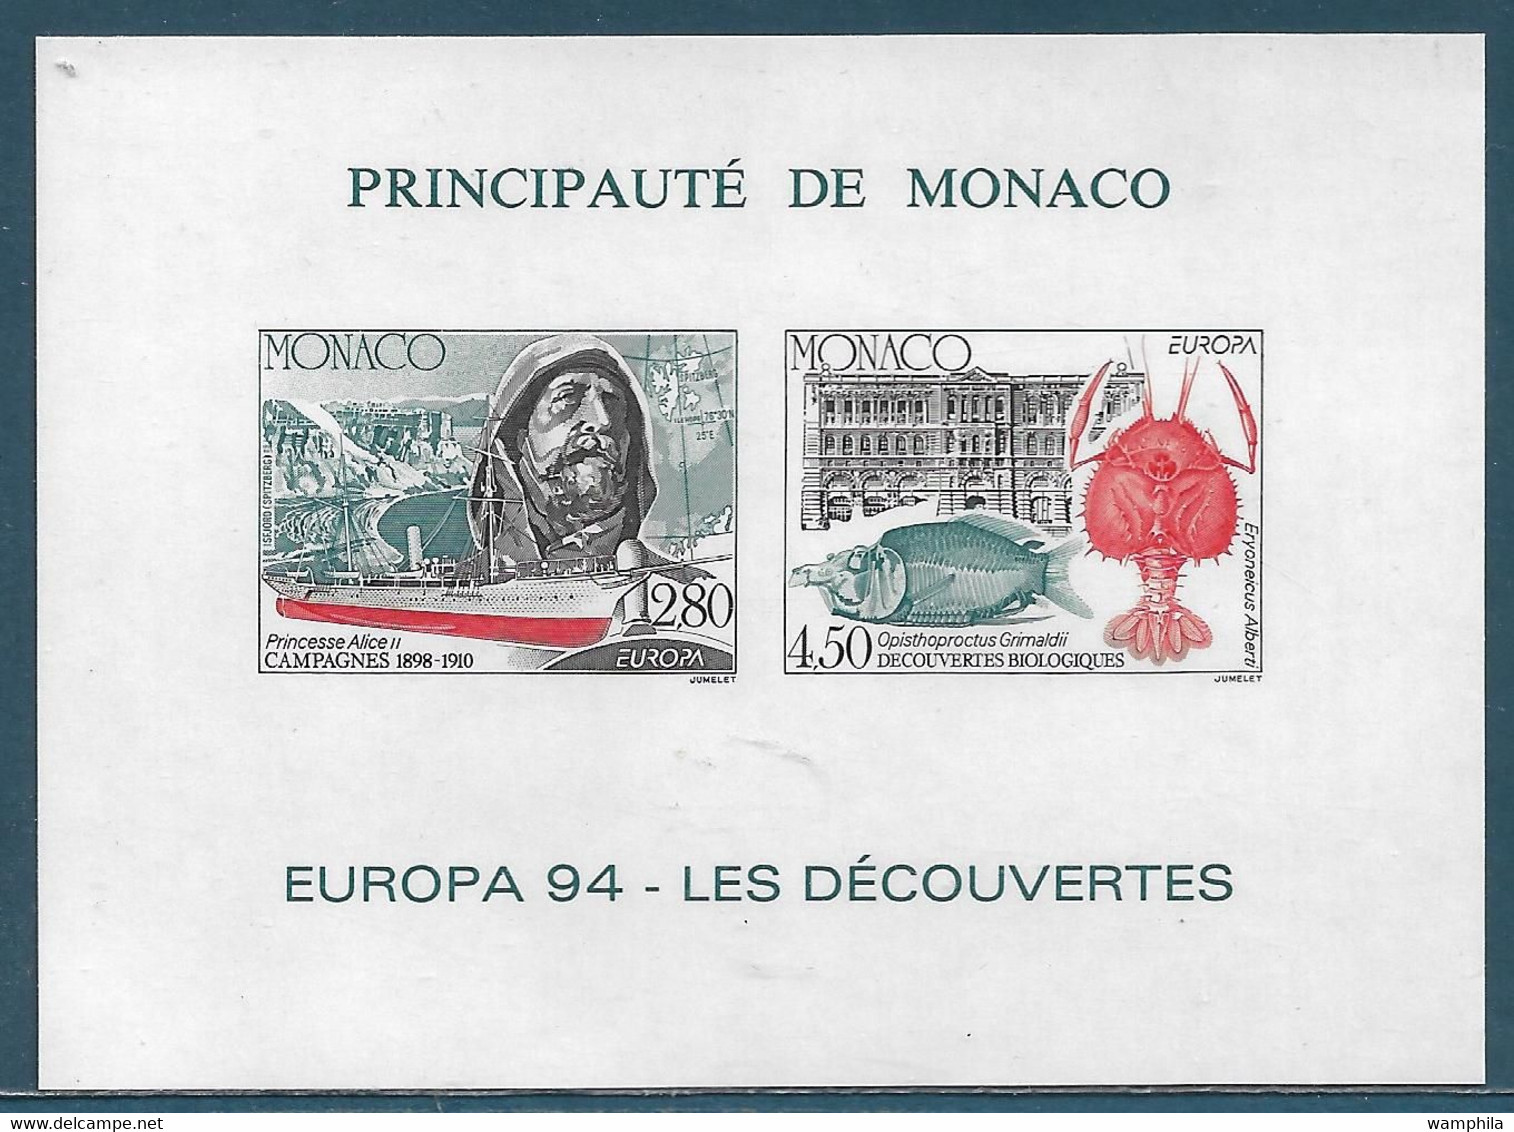 Monaco Bloc Spécial Gommé N°23a**non Dentelé, Timbres 1935/36 Europa 1994 Cote 200€. - Errors And Oddities